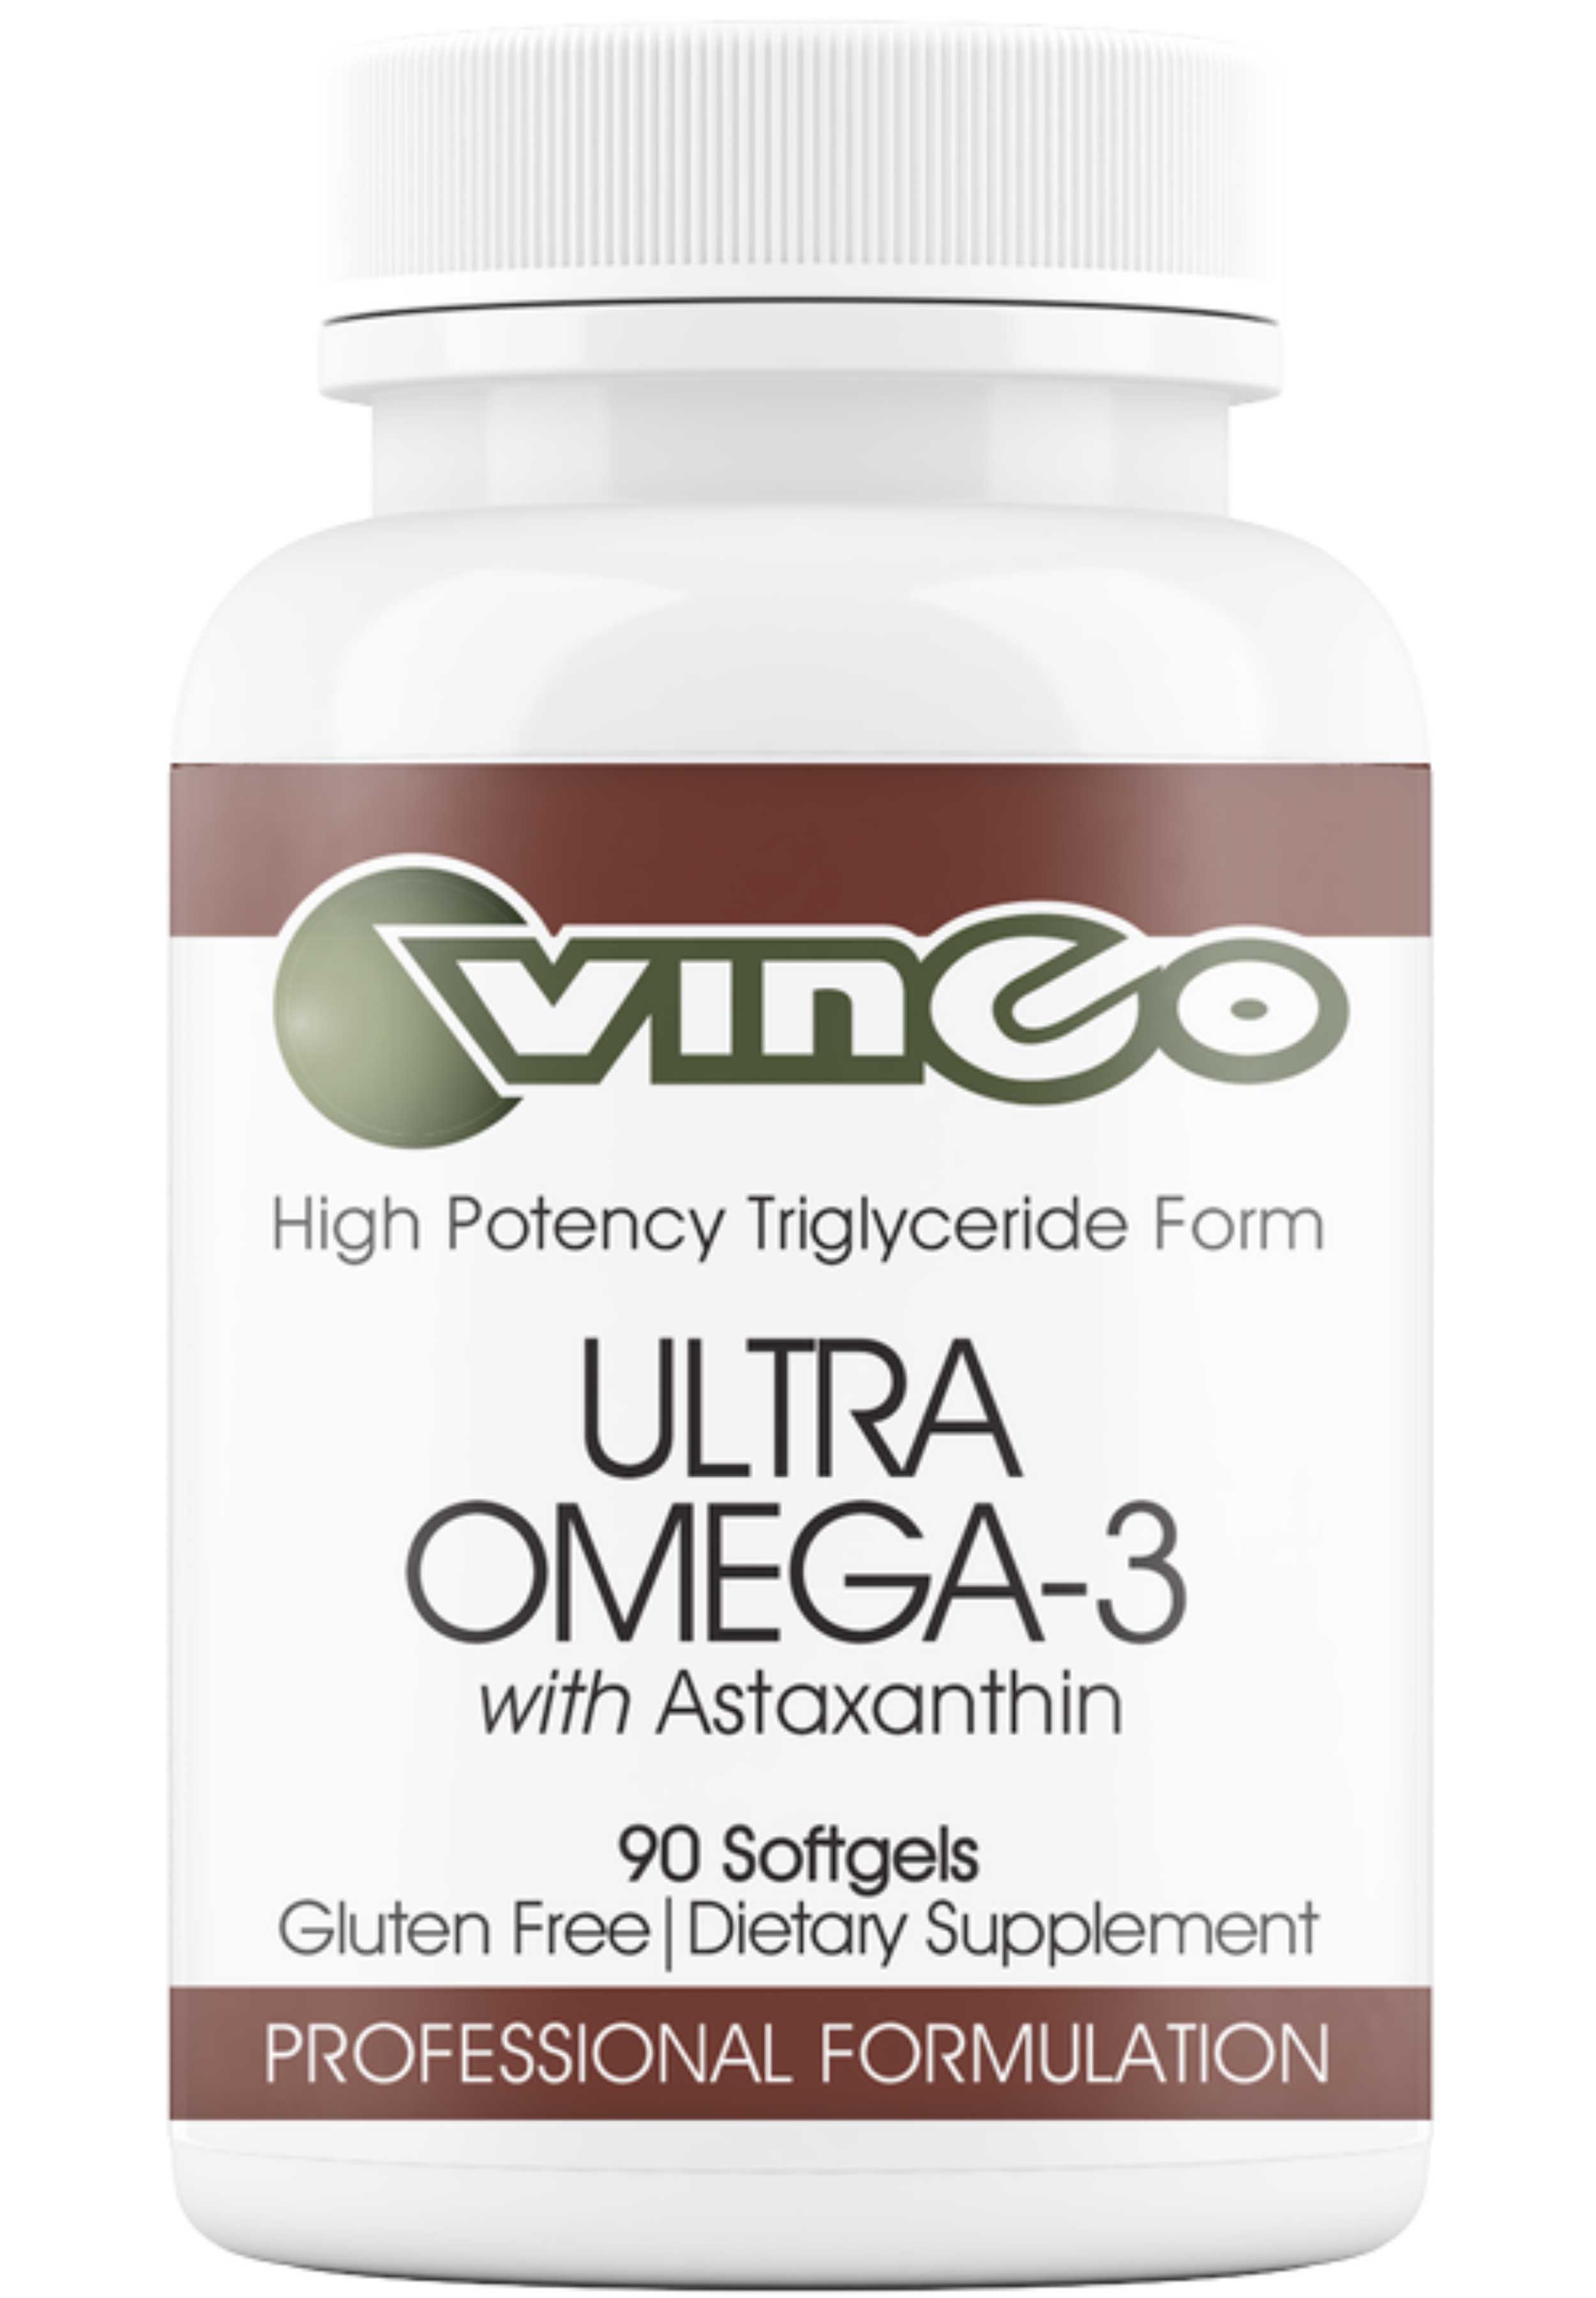 Vinco Ultra Omega-3